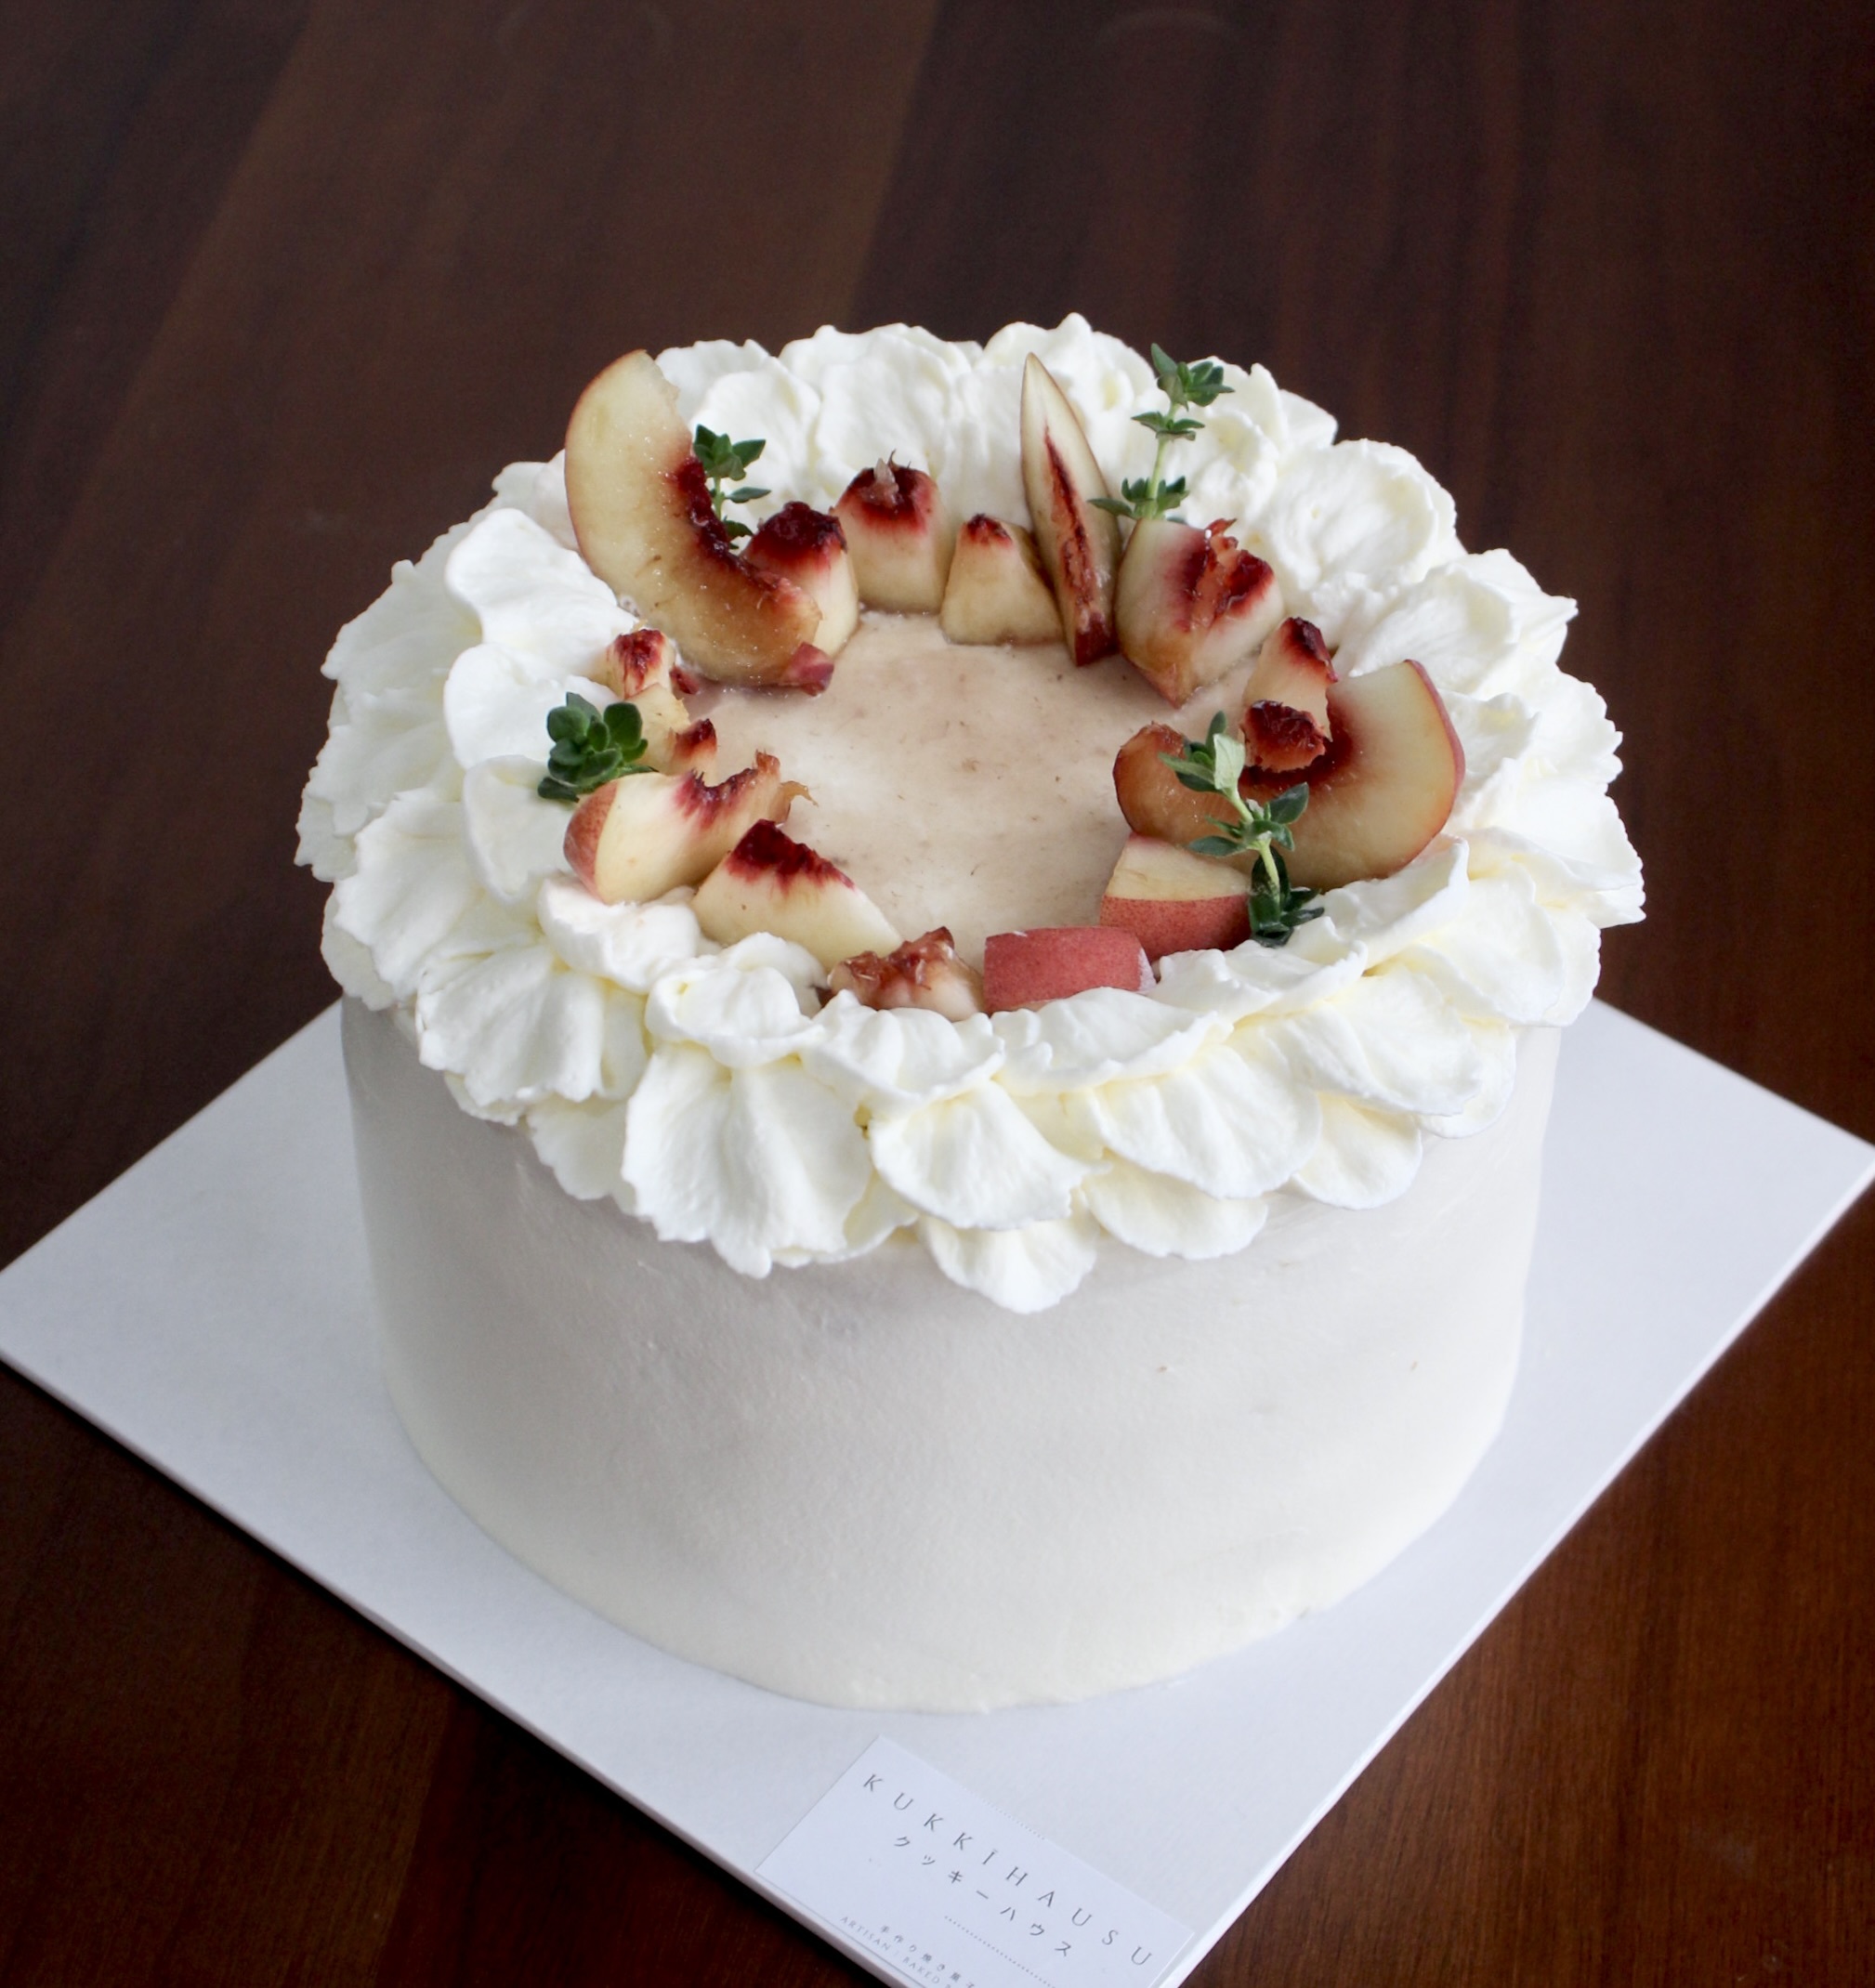 white peach oolong gluten-free cake